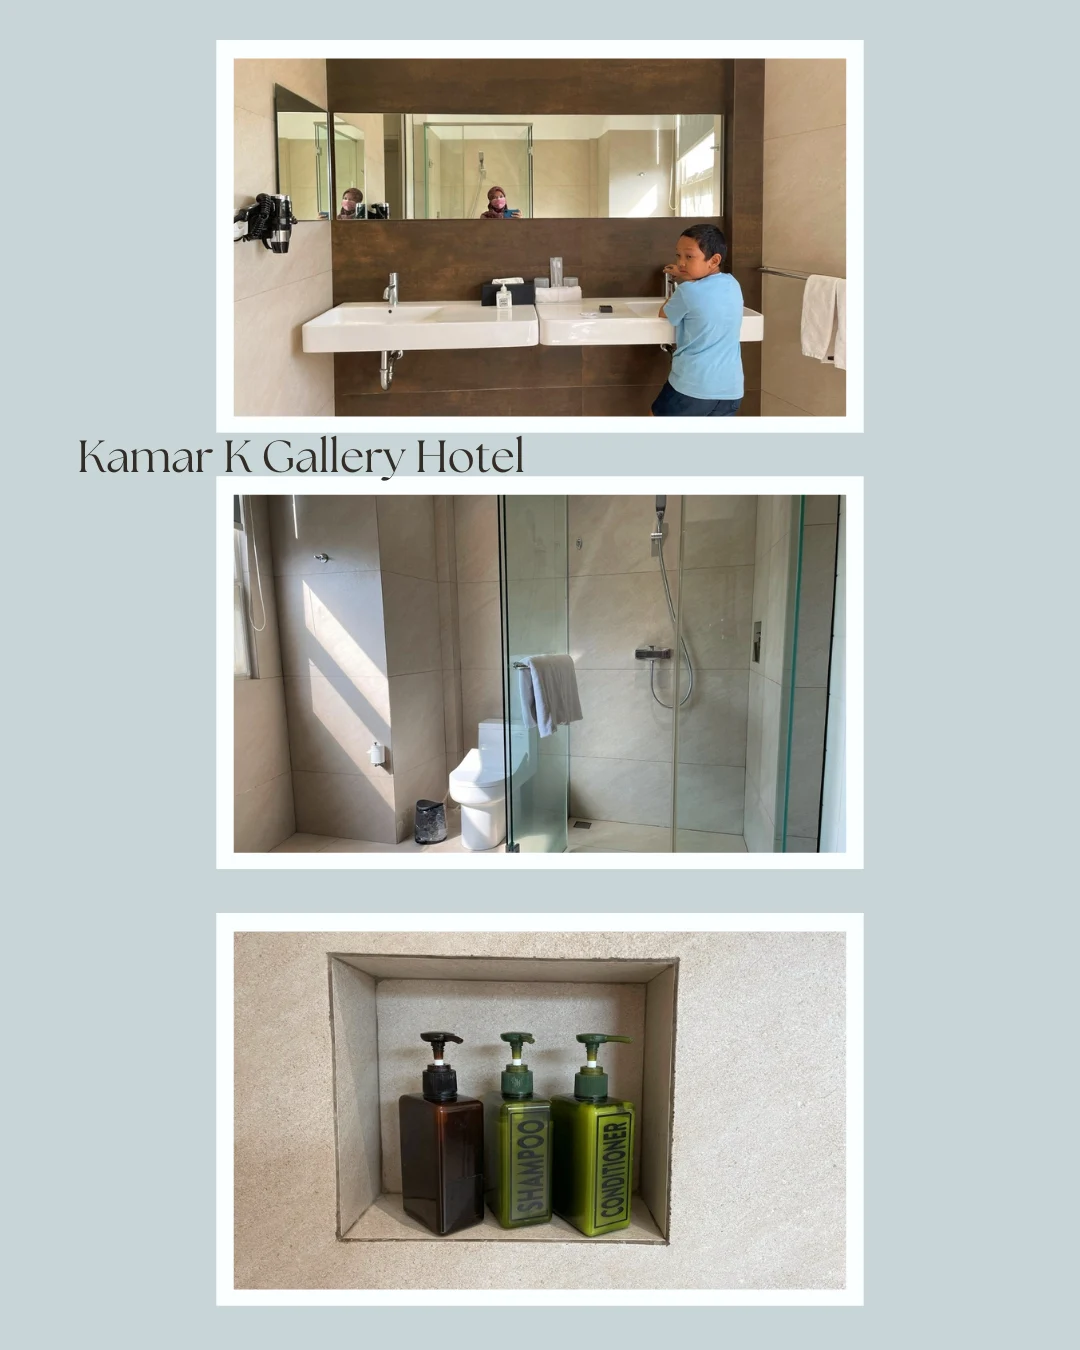 Kamar K Gallery Hotel